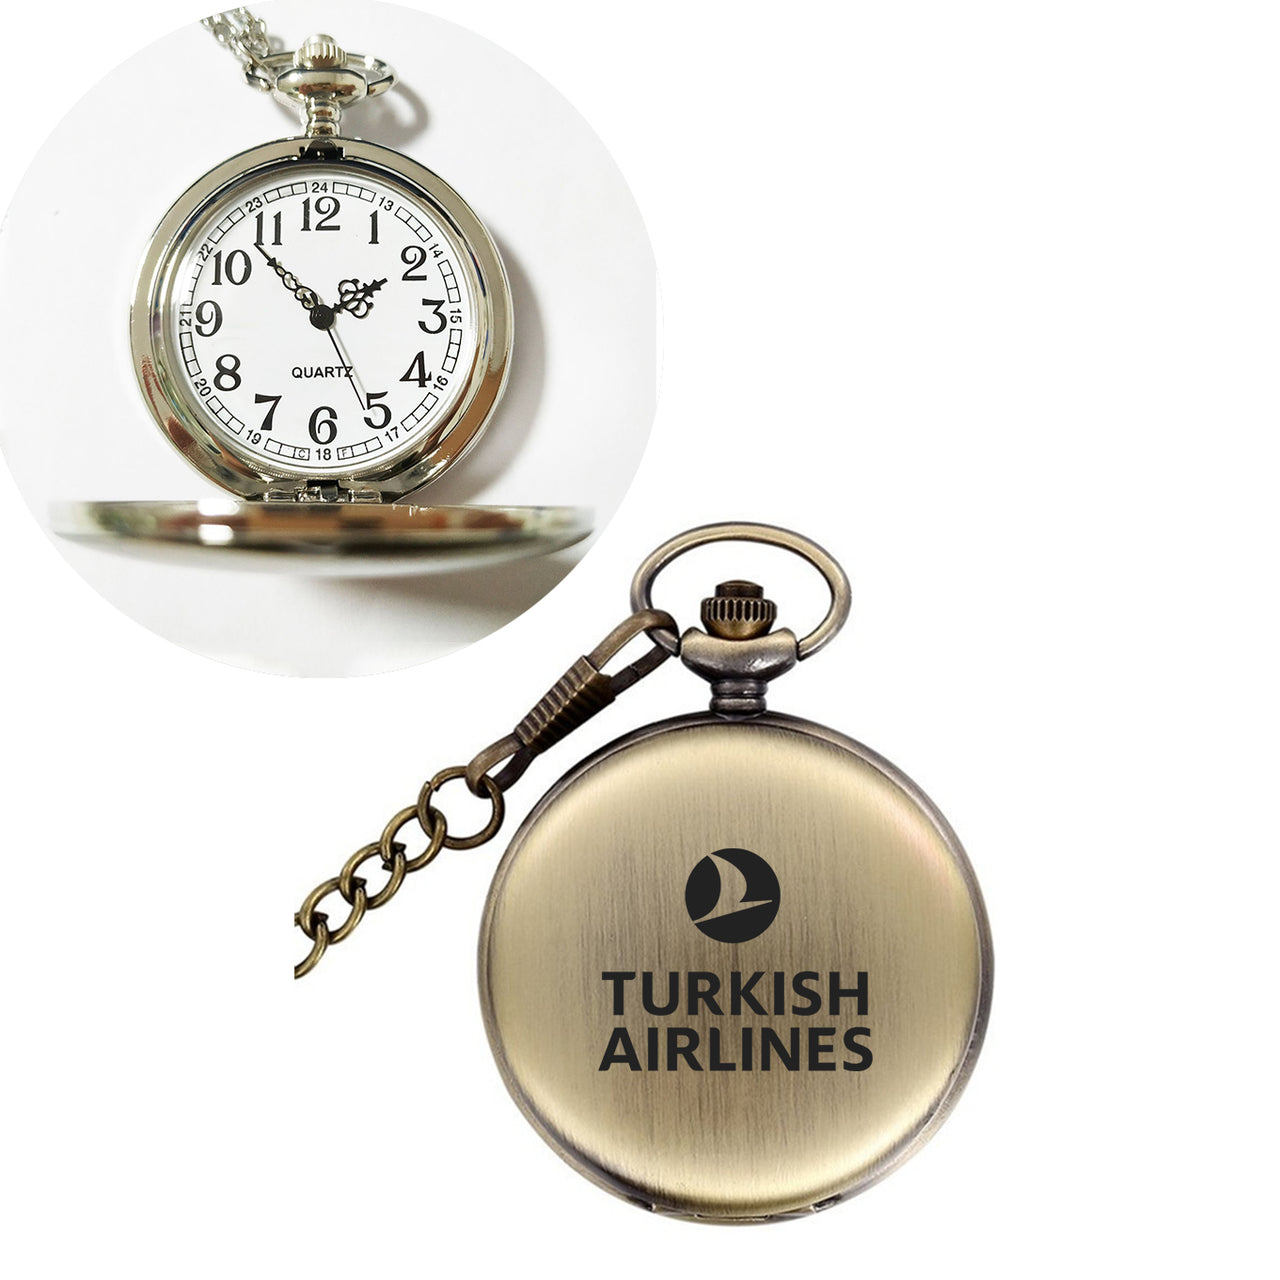 Turkish Airlines Designed Pocket Watches